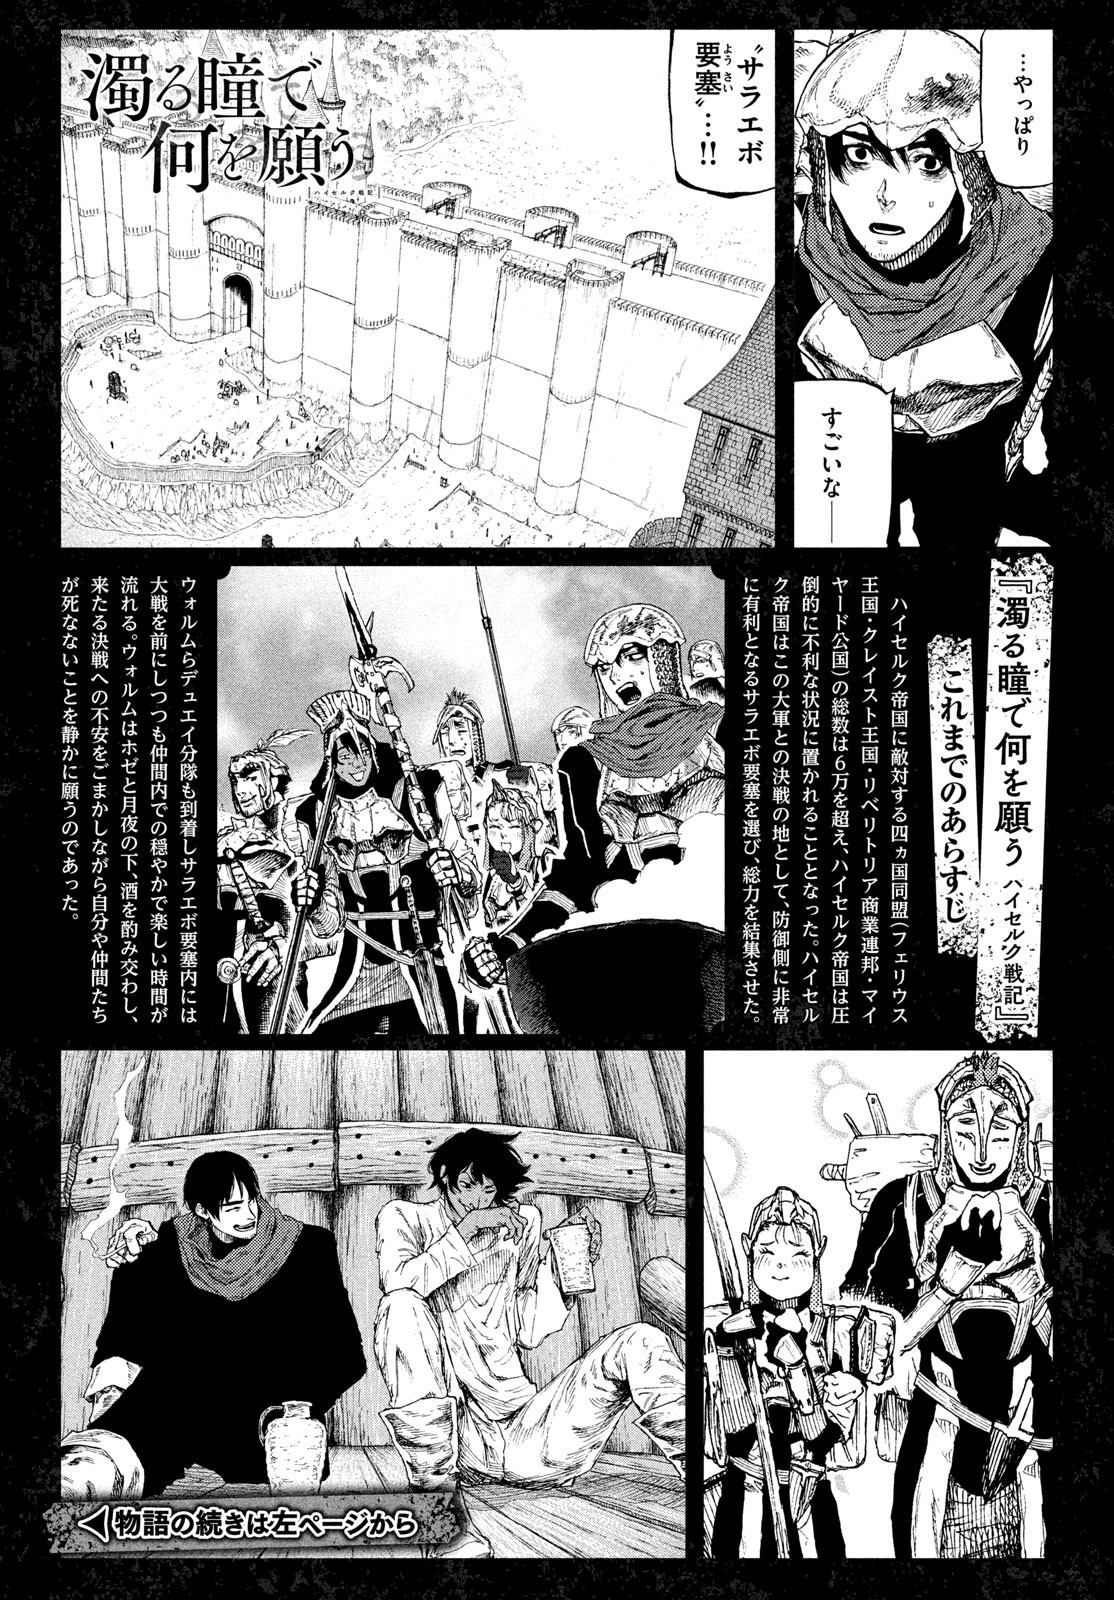 Nigoru Hitomi de Nani wo Negau – Highserk Senki - Chapter 15 - Page 1